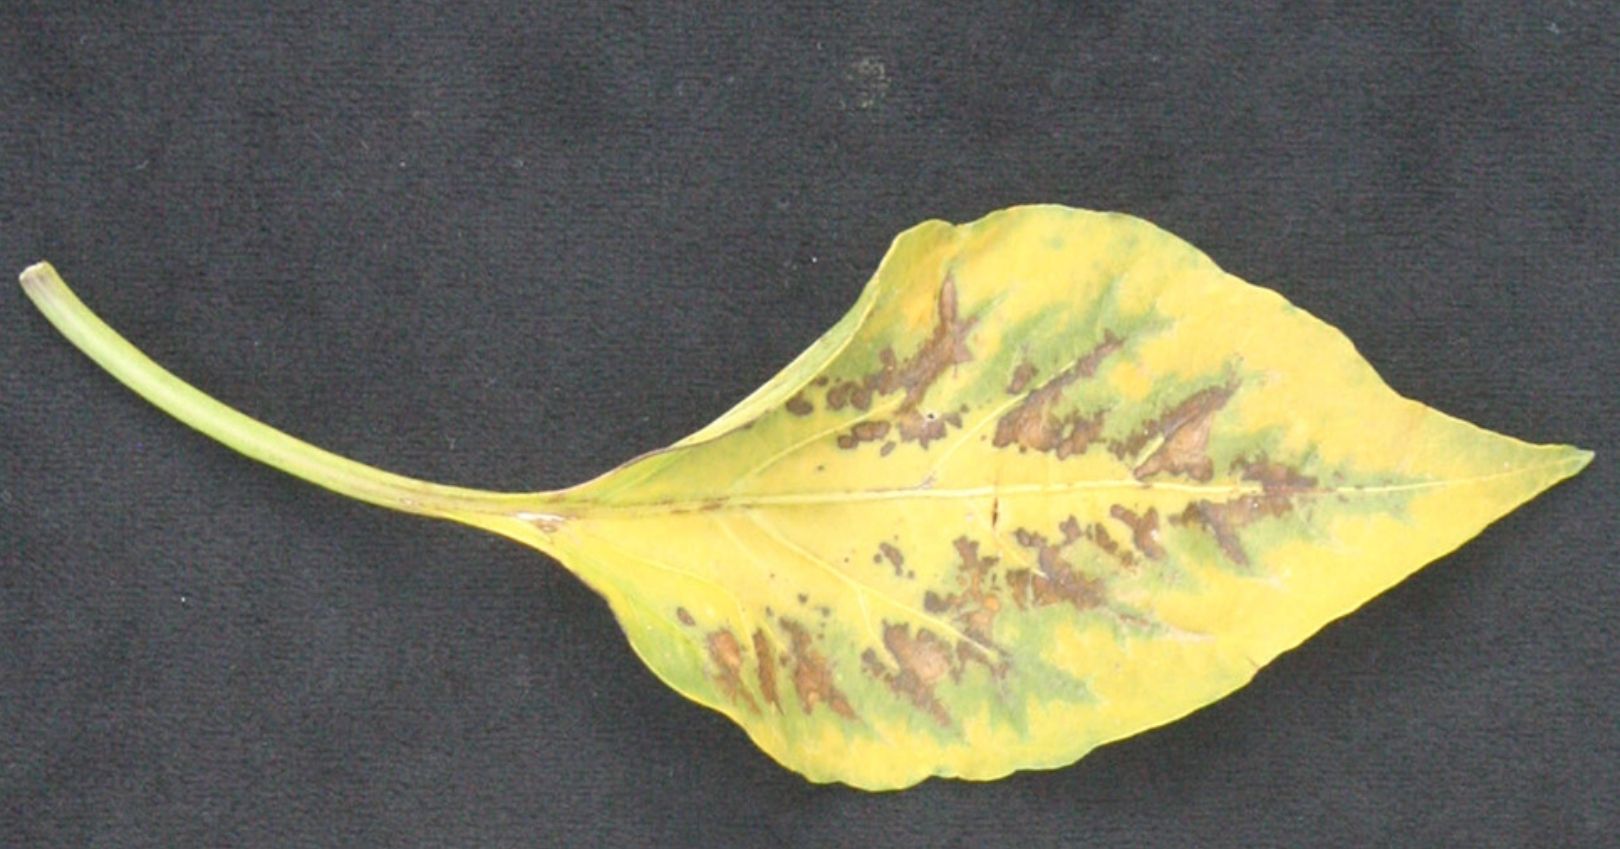 TMV Symptoms on Pepper Foliage